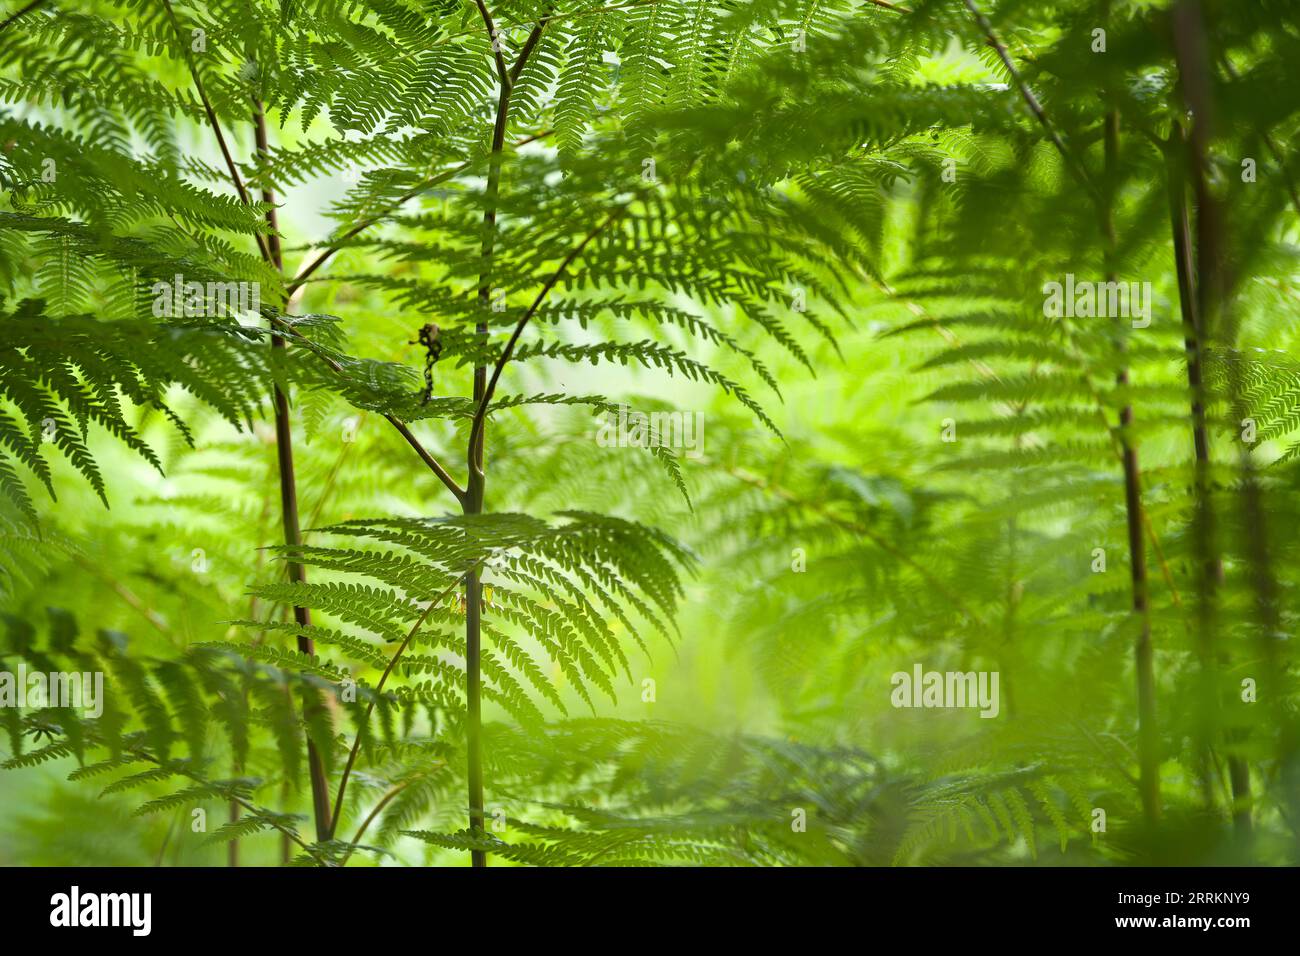 Eagle fern (Pteridium aquilinum), forest of fern plants from frog perspective, Pfälzerwald Nature Park, Pfälzerwald-Nordvogesen Biosphere Reserve, Germany, Rhineland-Palatinate Stock Photo